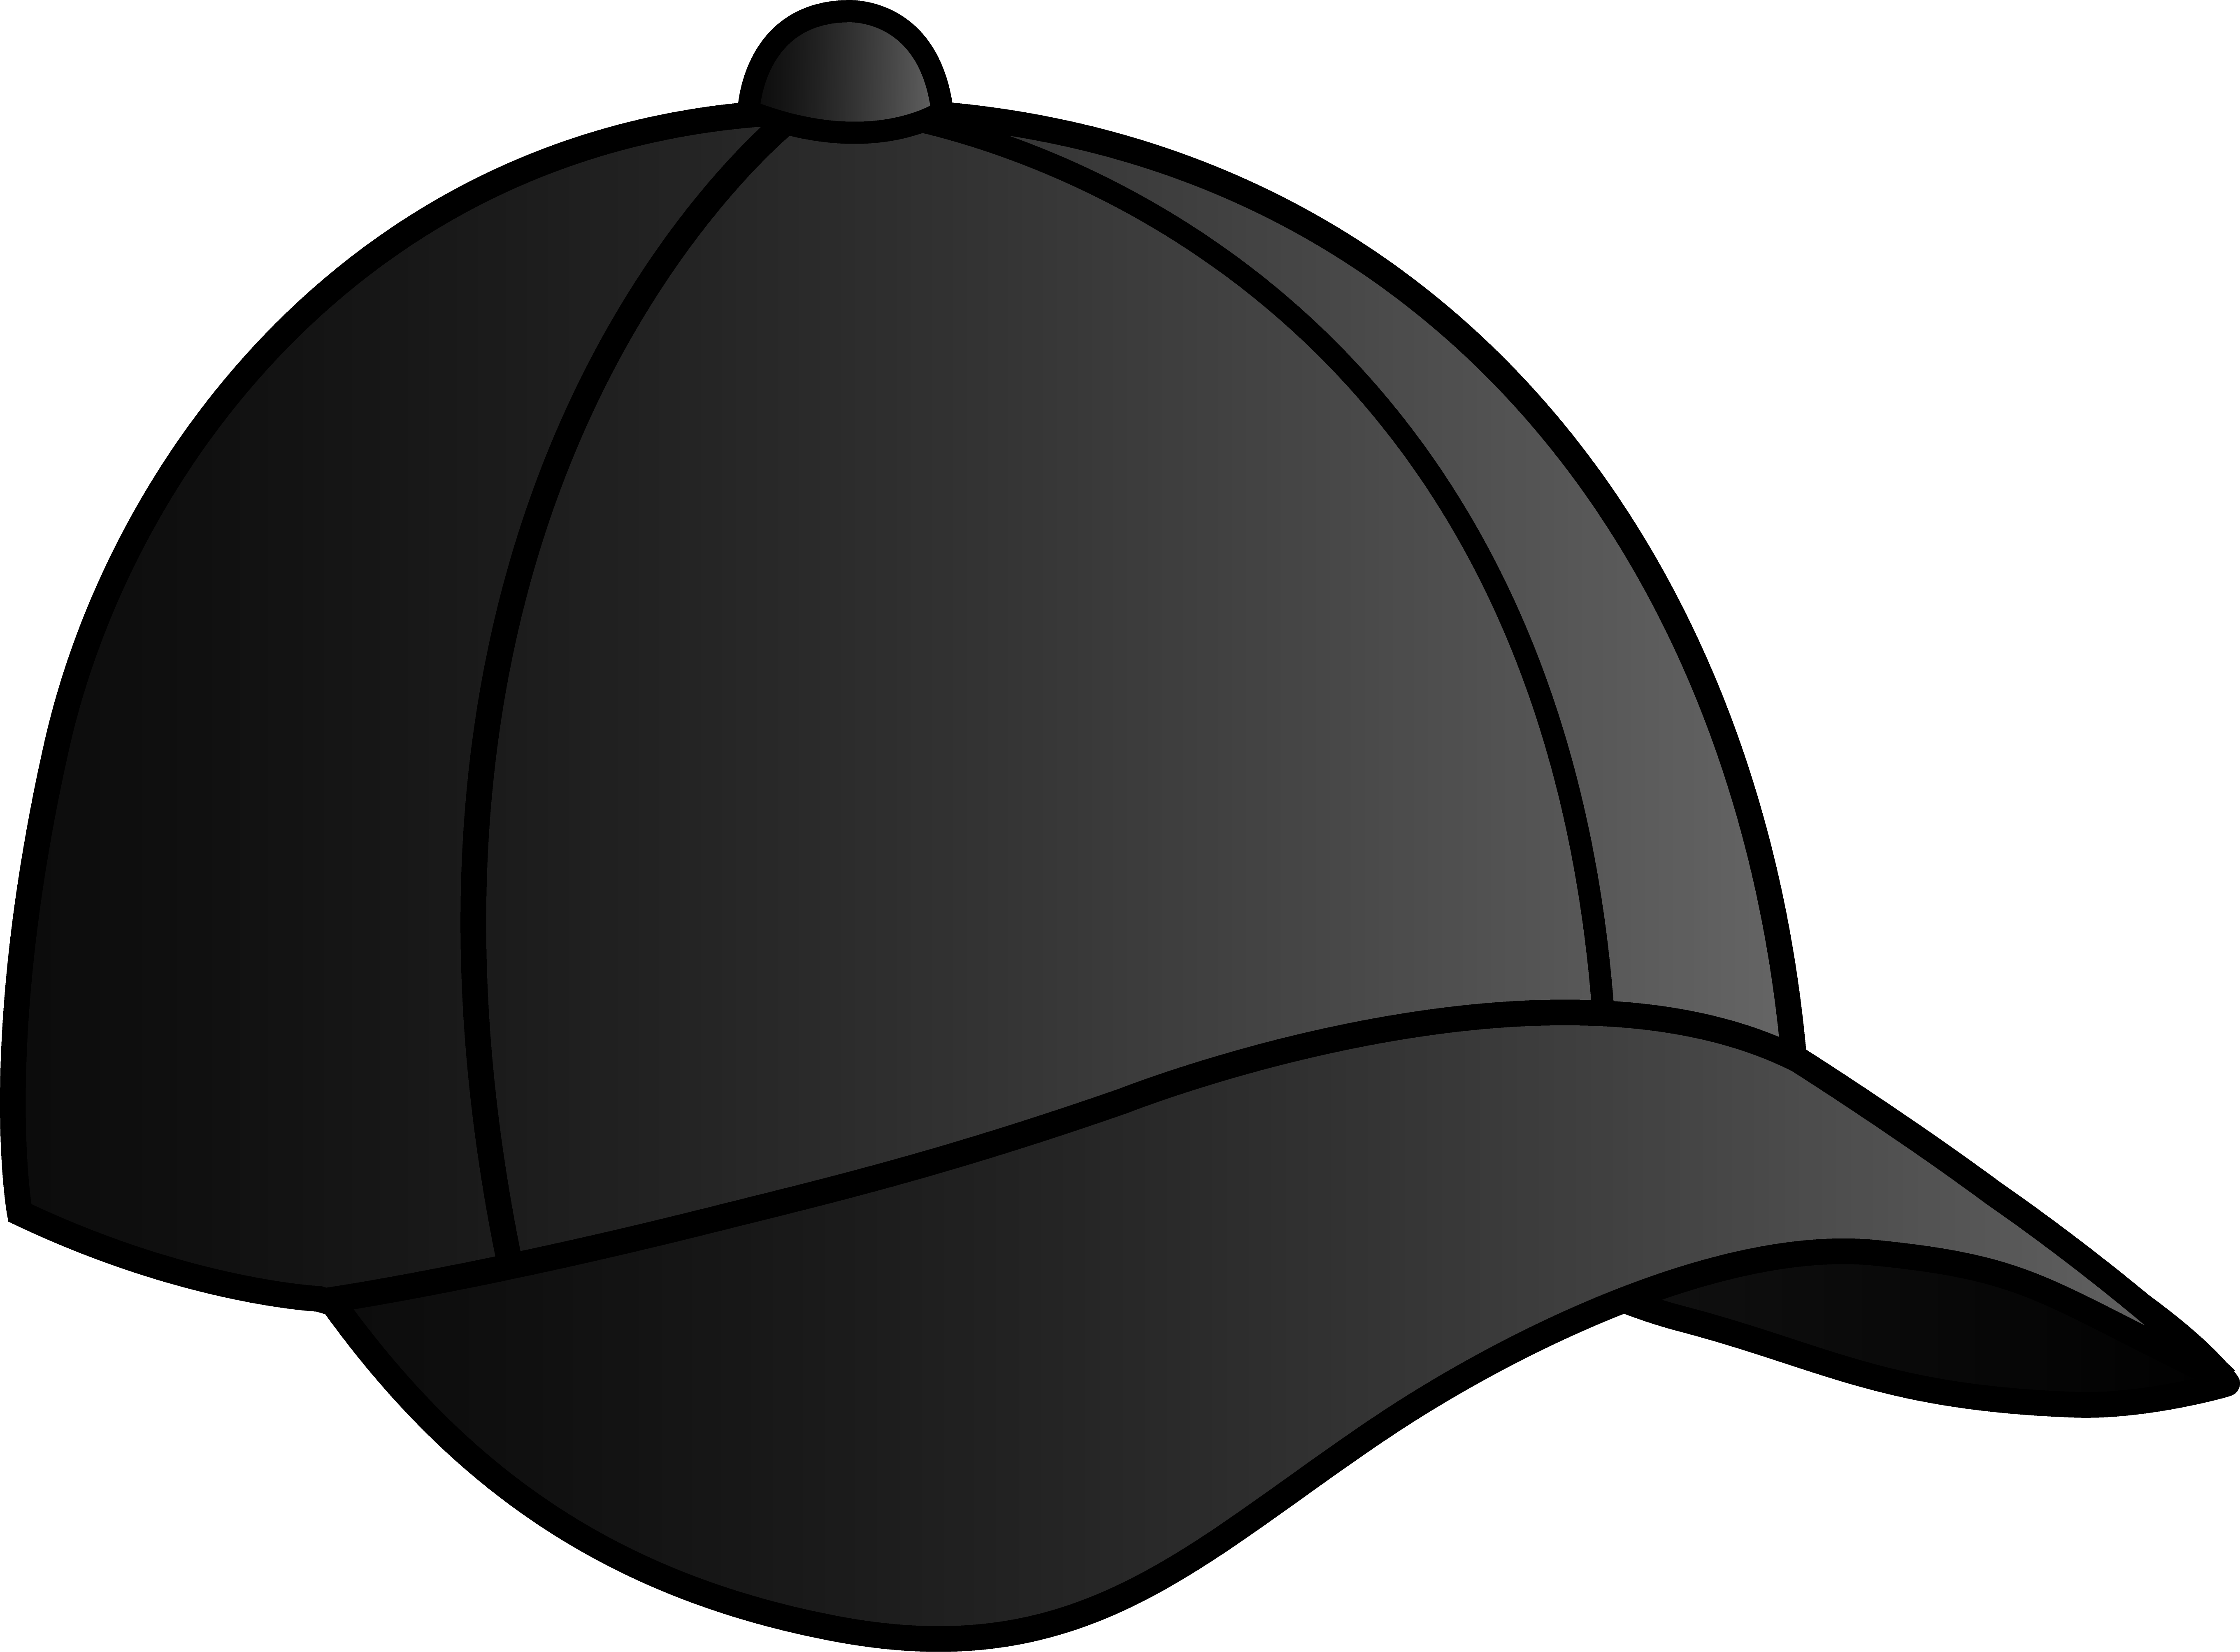 Picture Of A Baseball Cap | Free Download Clip Art | Free Clip Art ...